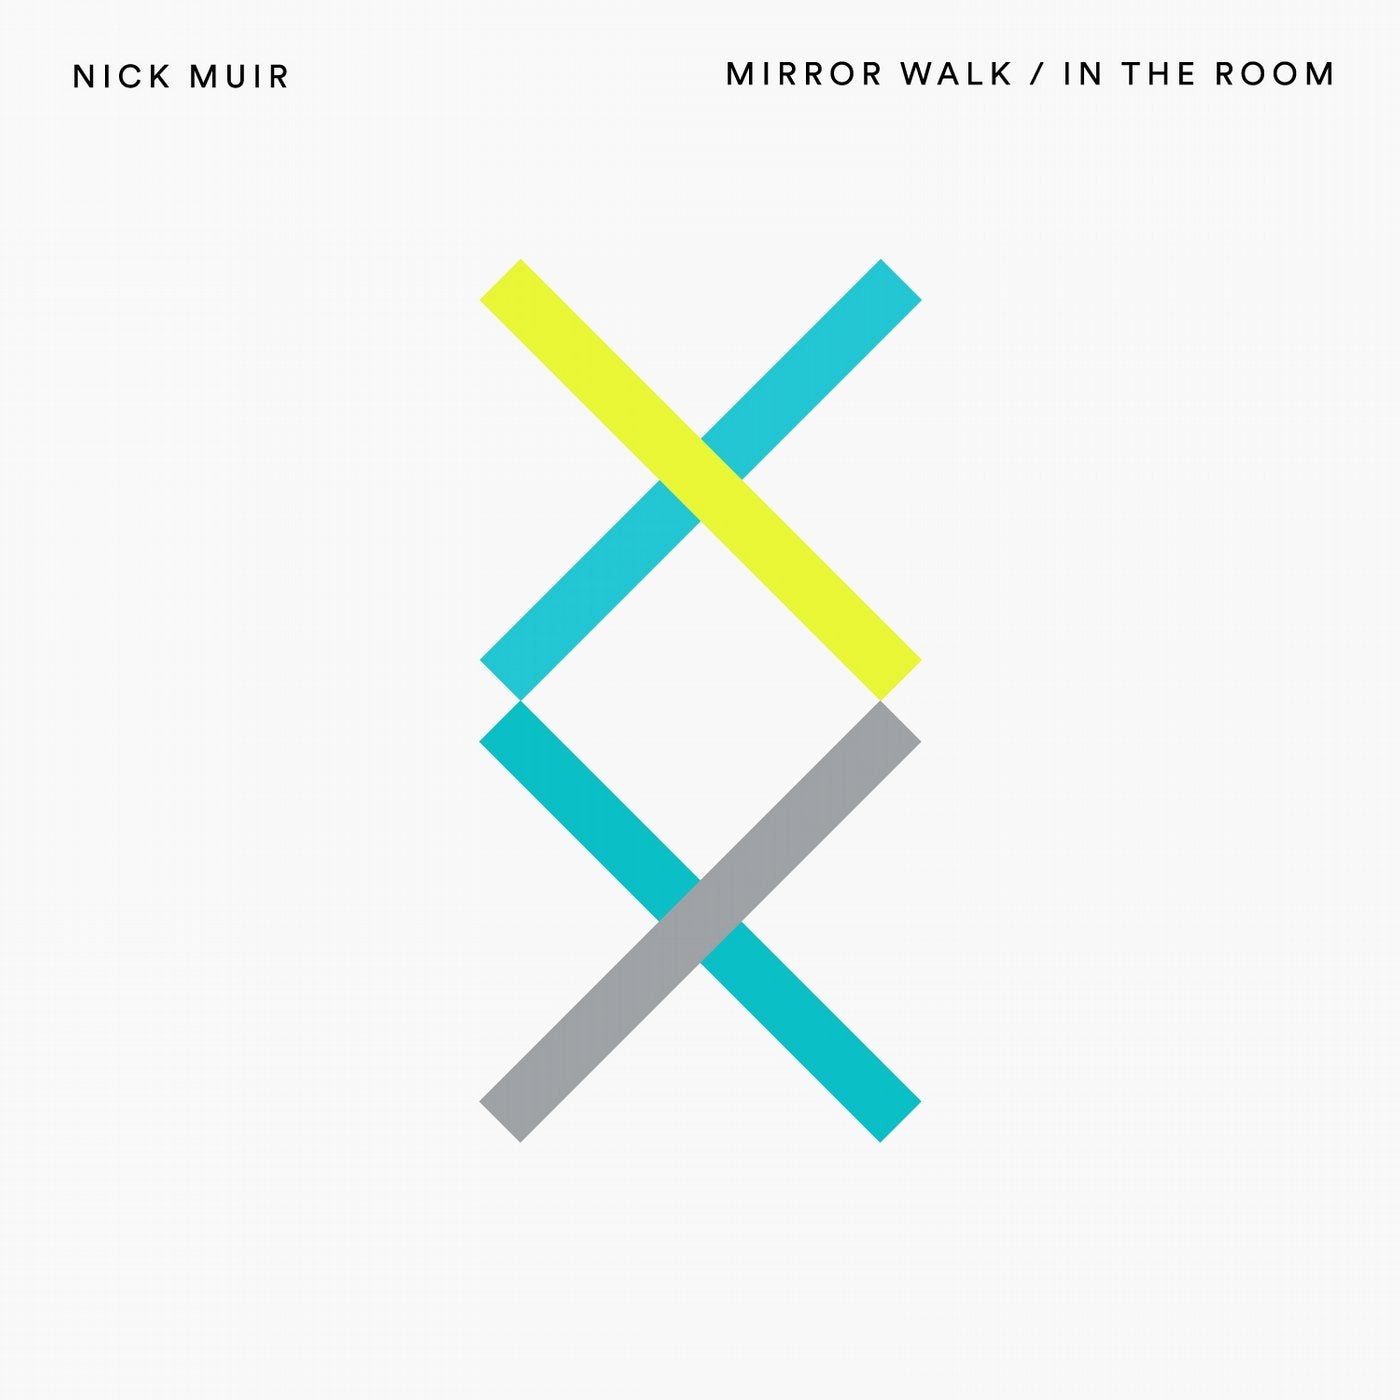 Mirror Walk / In The Room